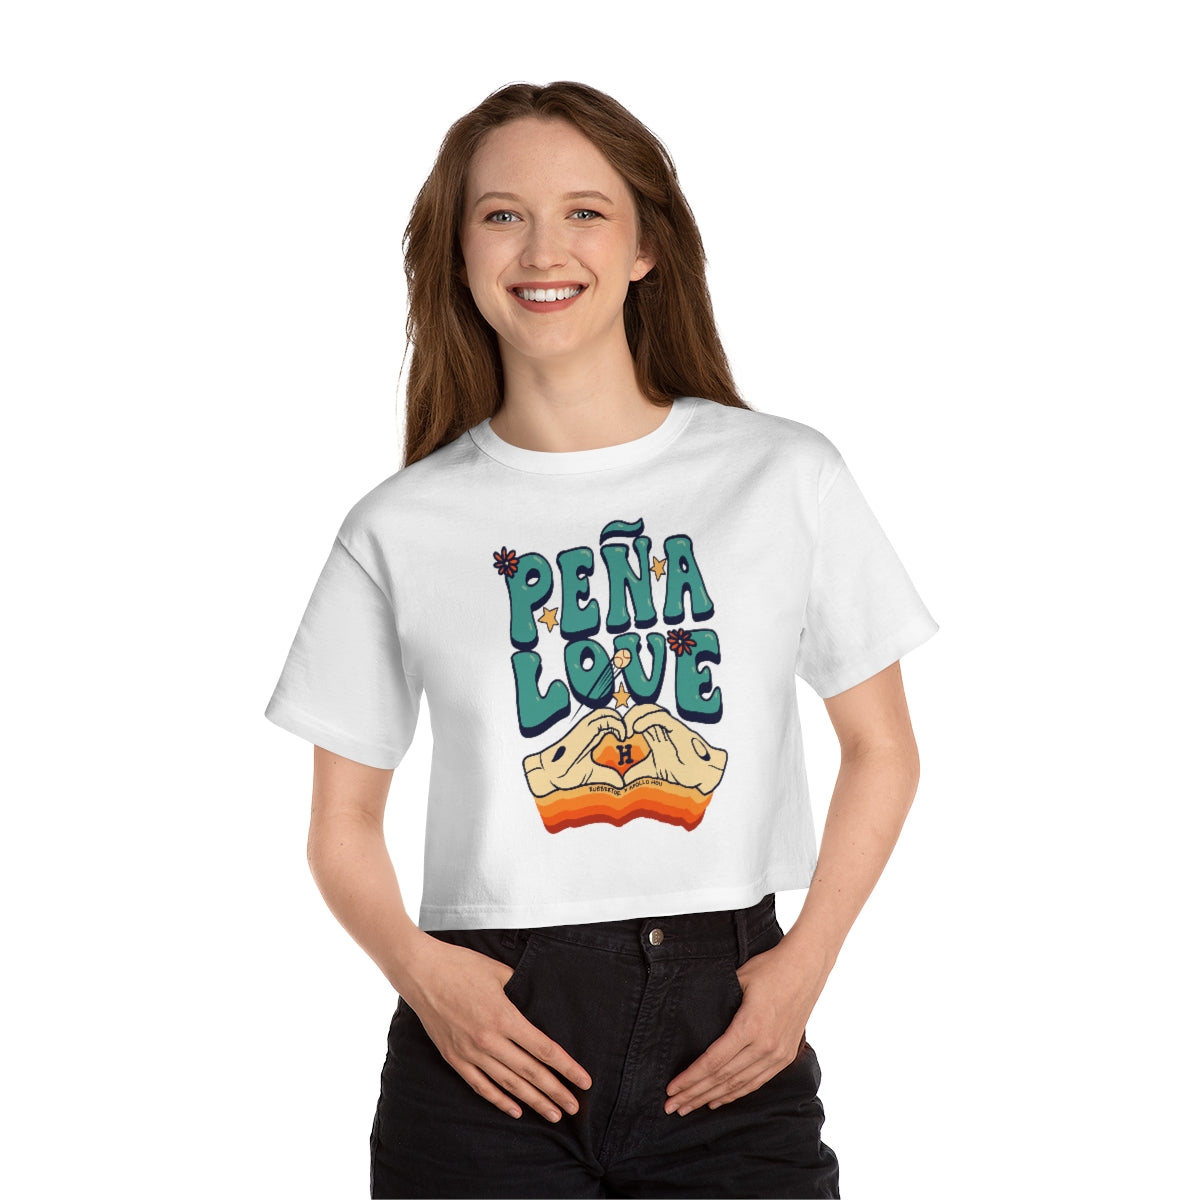 Peña Love Champion Women's Heritage Cropped T-Shirt